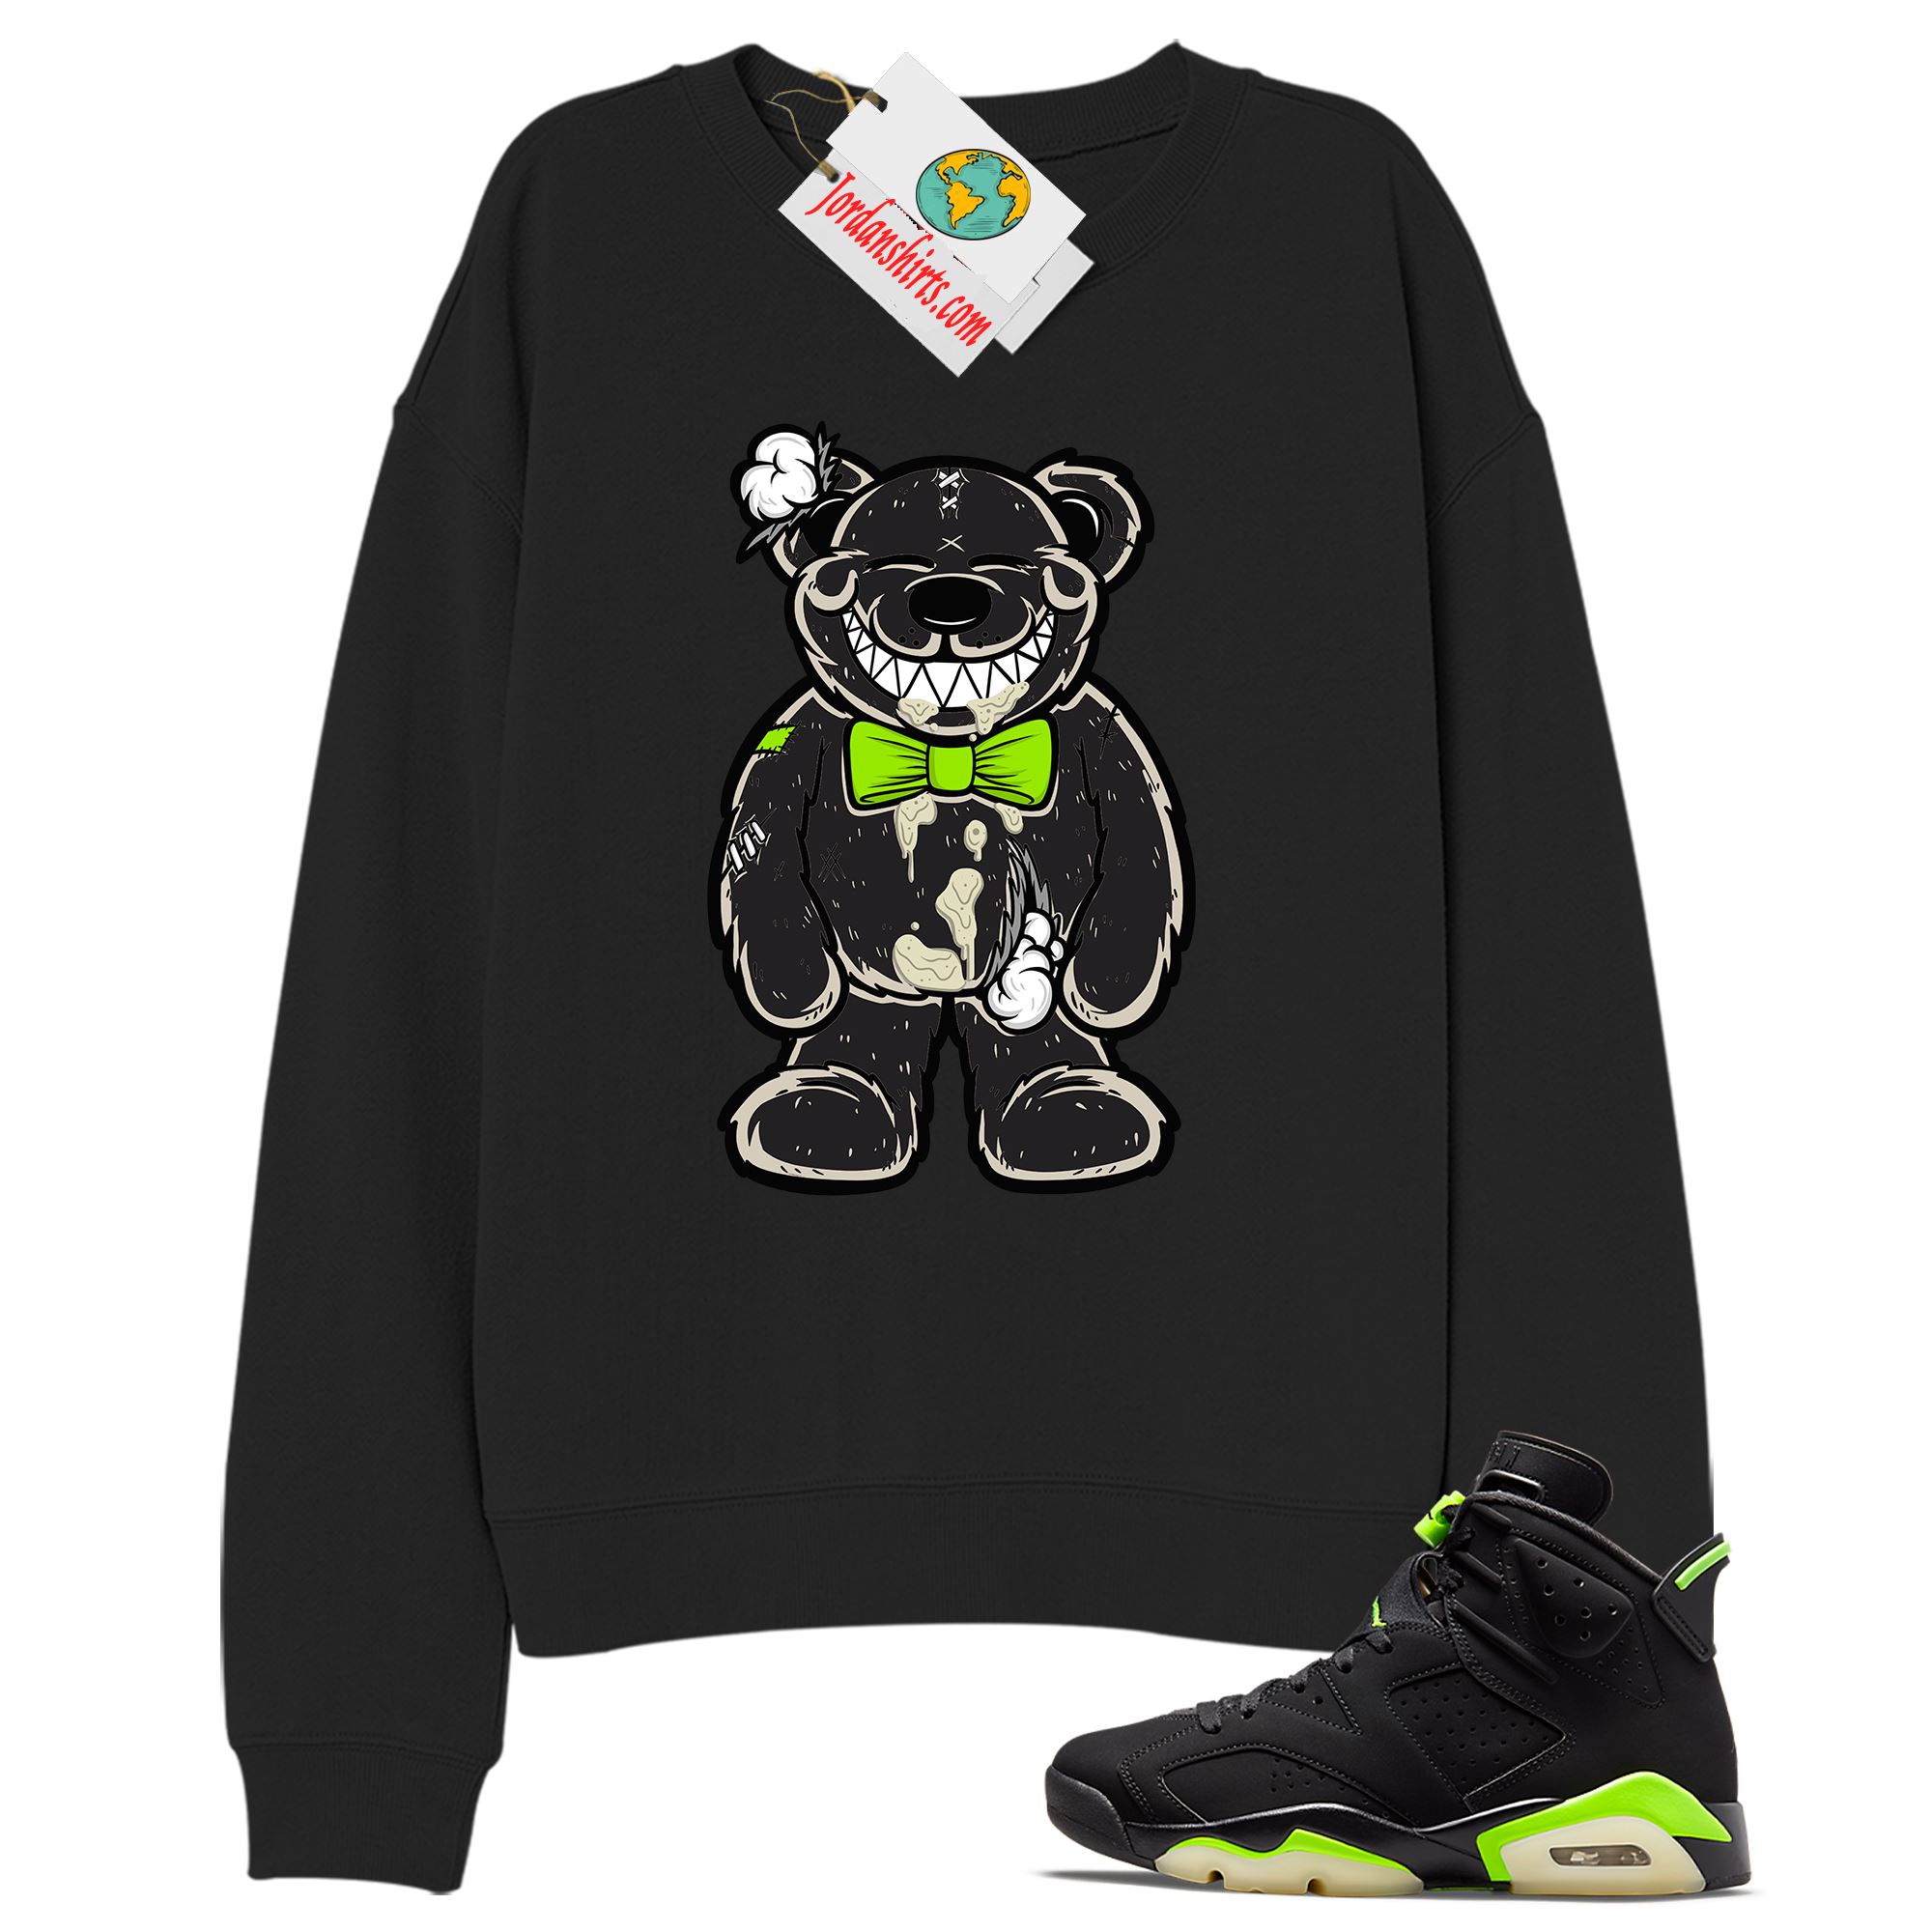 Jordan 6 Sweatshirt, Teddy Bear Smile Black Sweatshirt Air Jordan 6 Electric Green 6s Full Size Up To 5xl